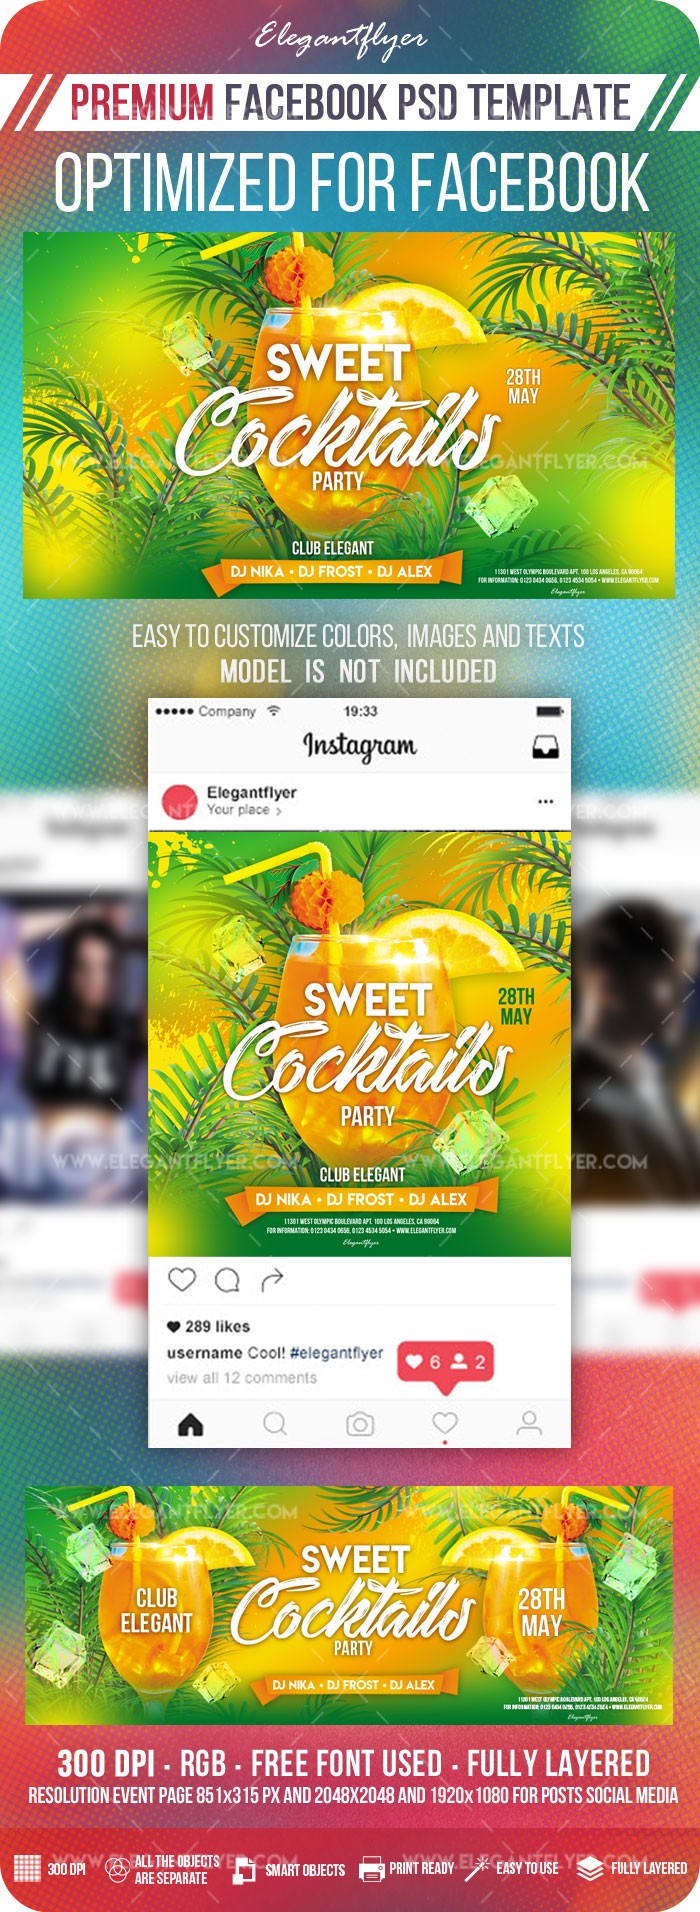 Sweet Cocktails Party Facebook by ElegantFlyer